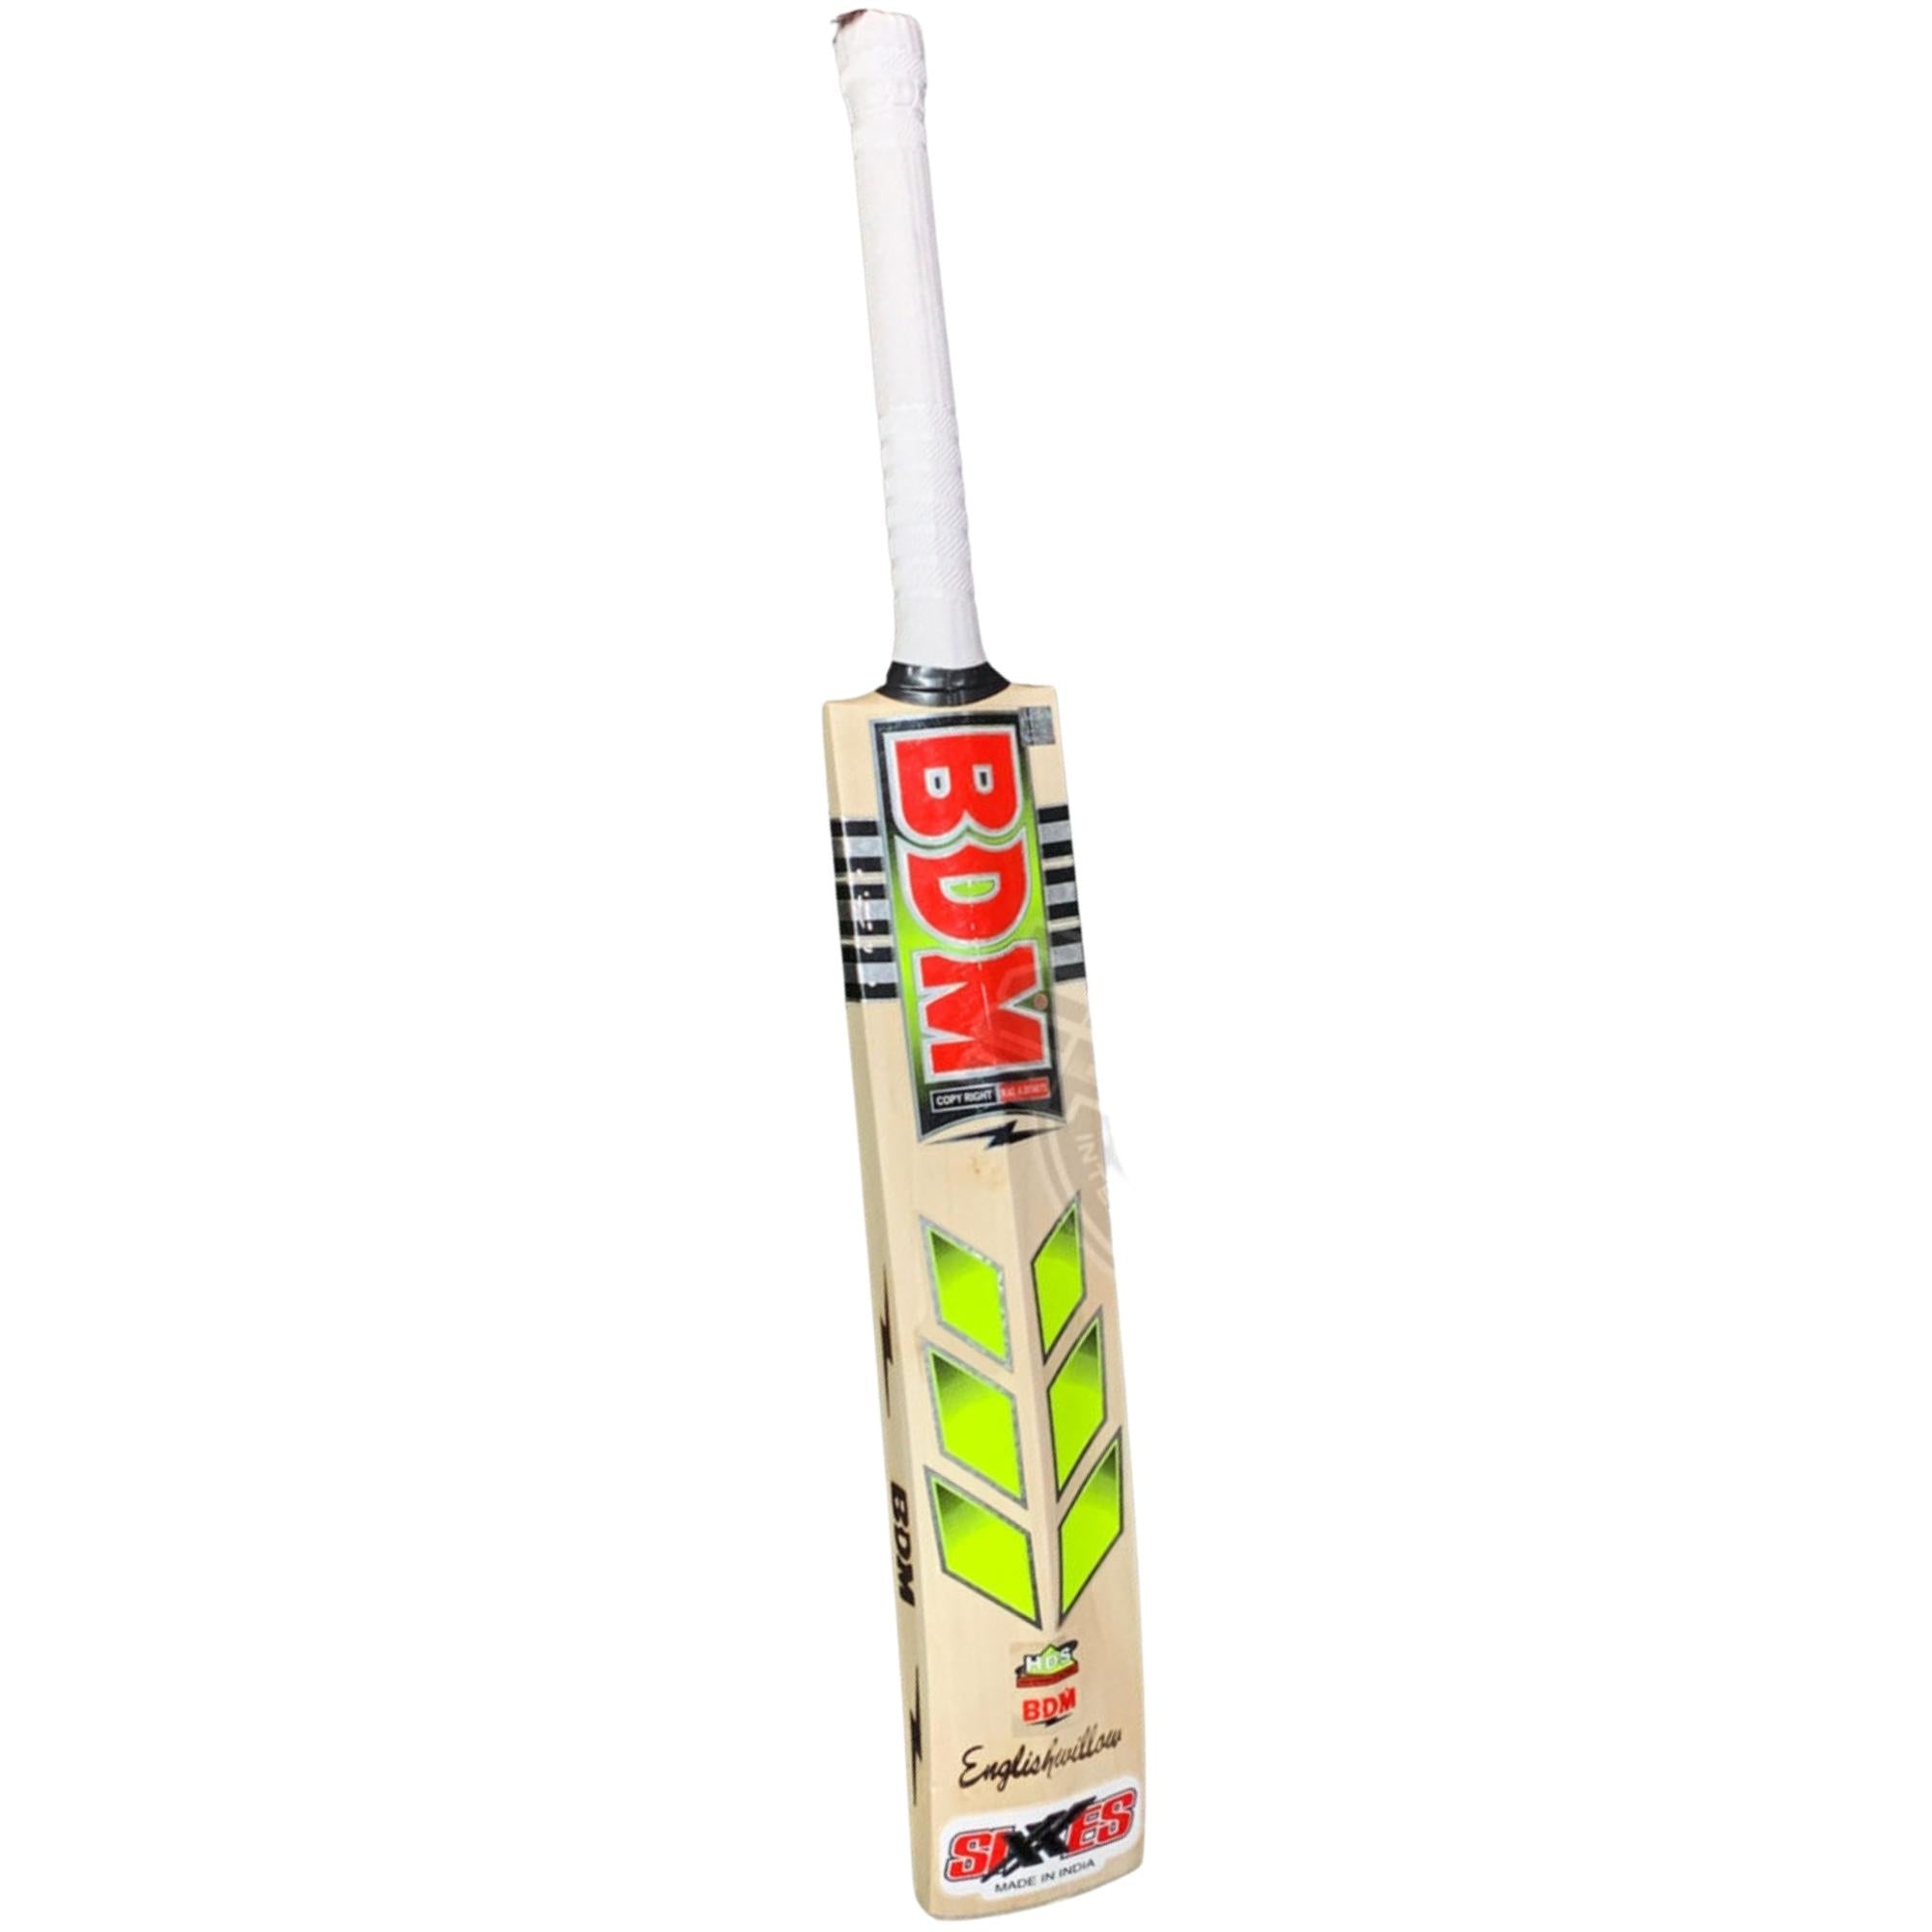 BDM SIXES Green Cricket Bat